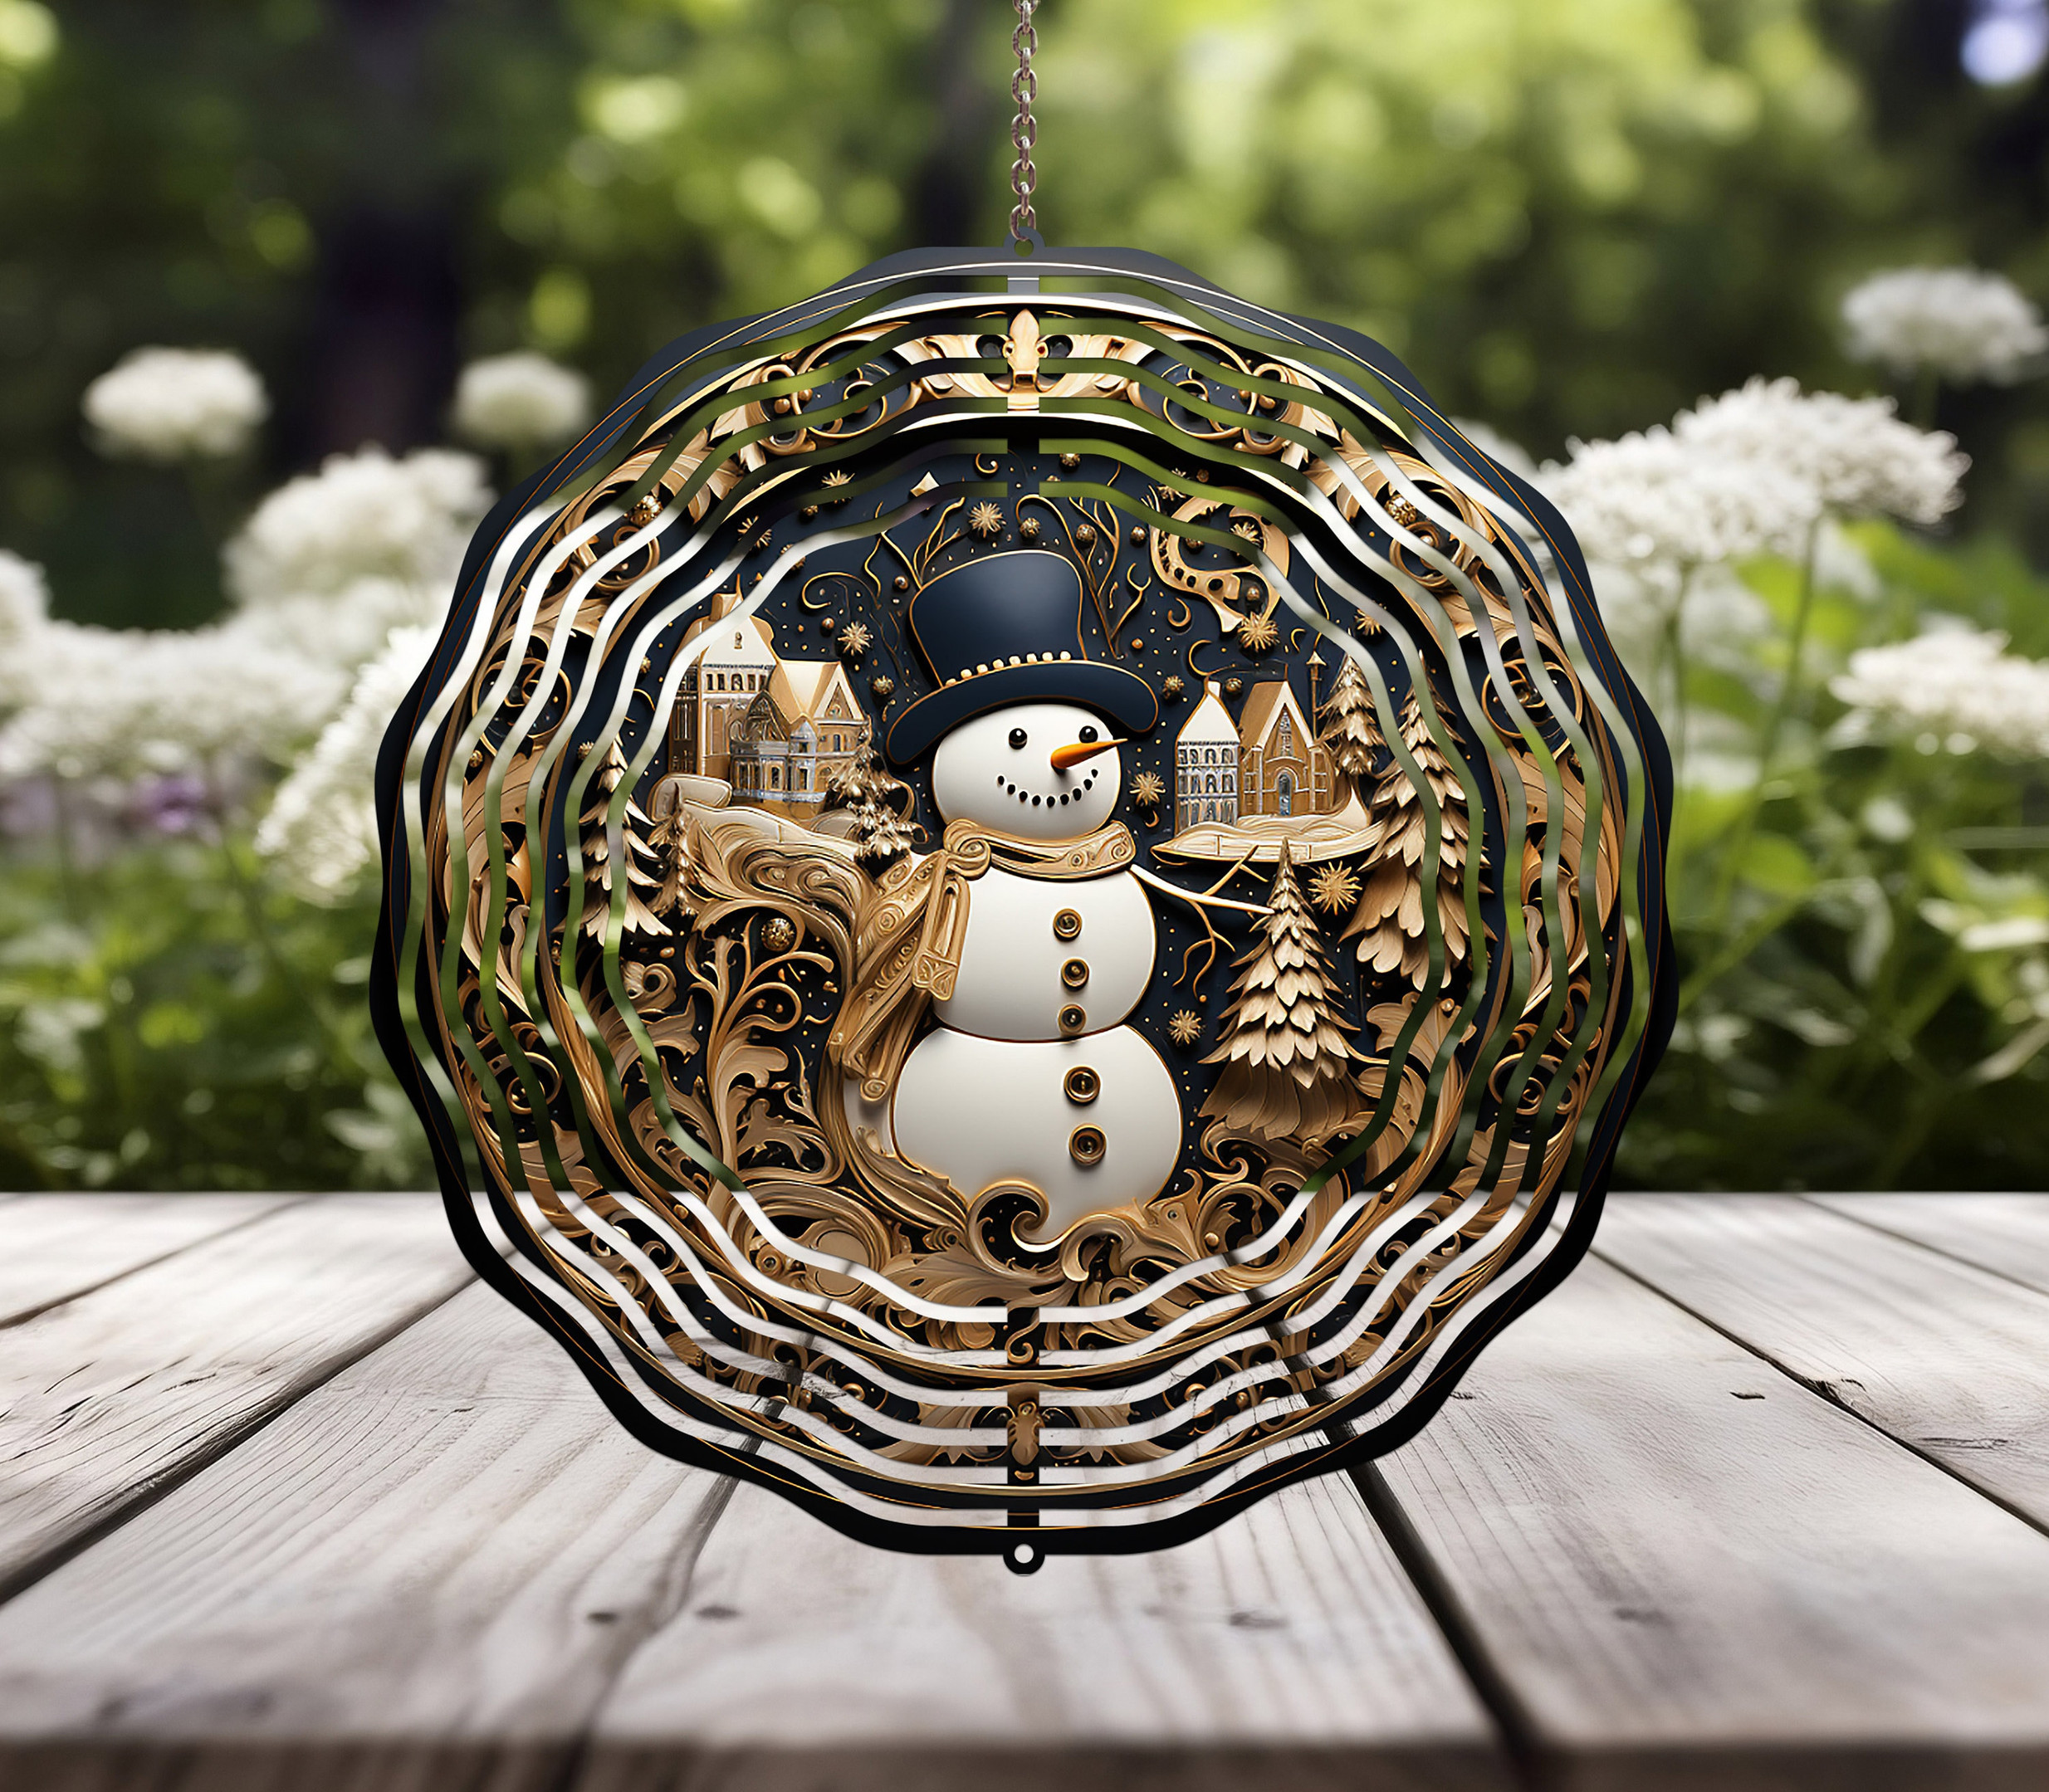 3D Snowman Wind Spinner For Yard And Garden, Outdoor Garden Yard Decoration, Garden Decor, Chime Art Gift